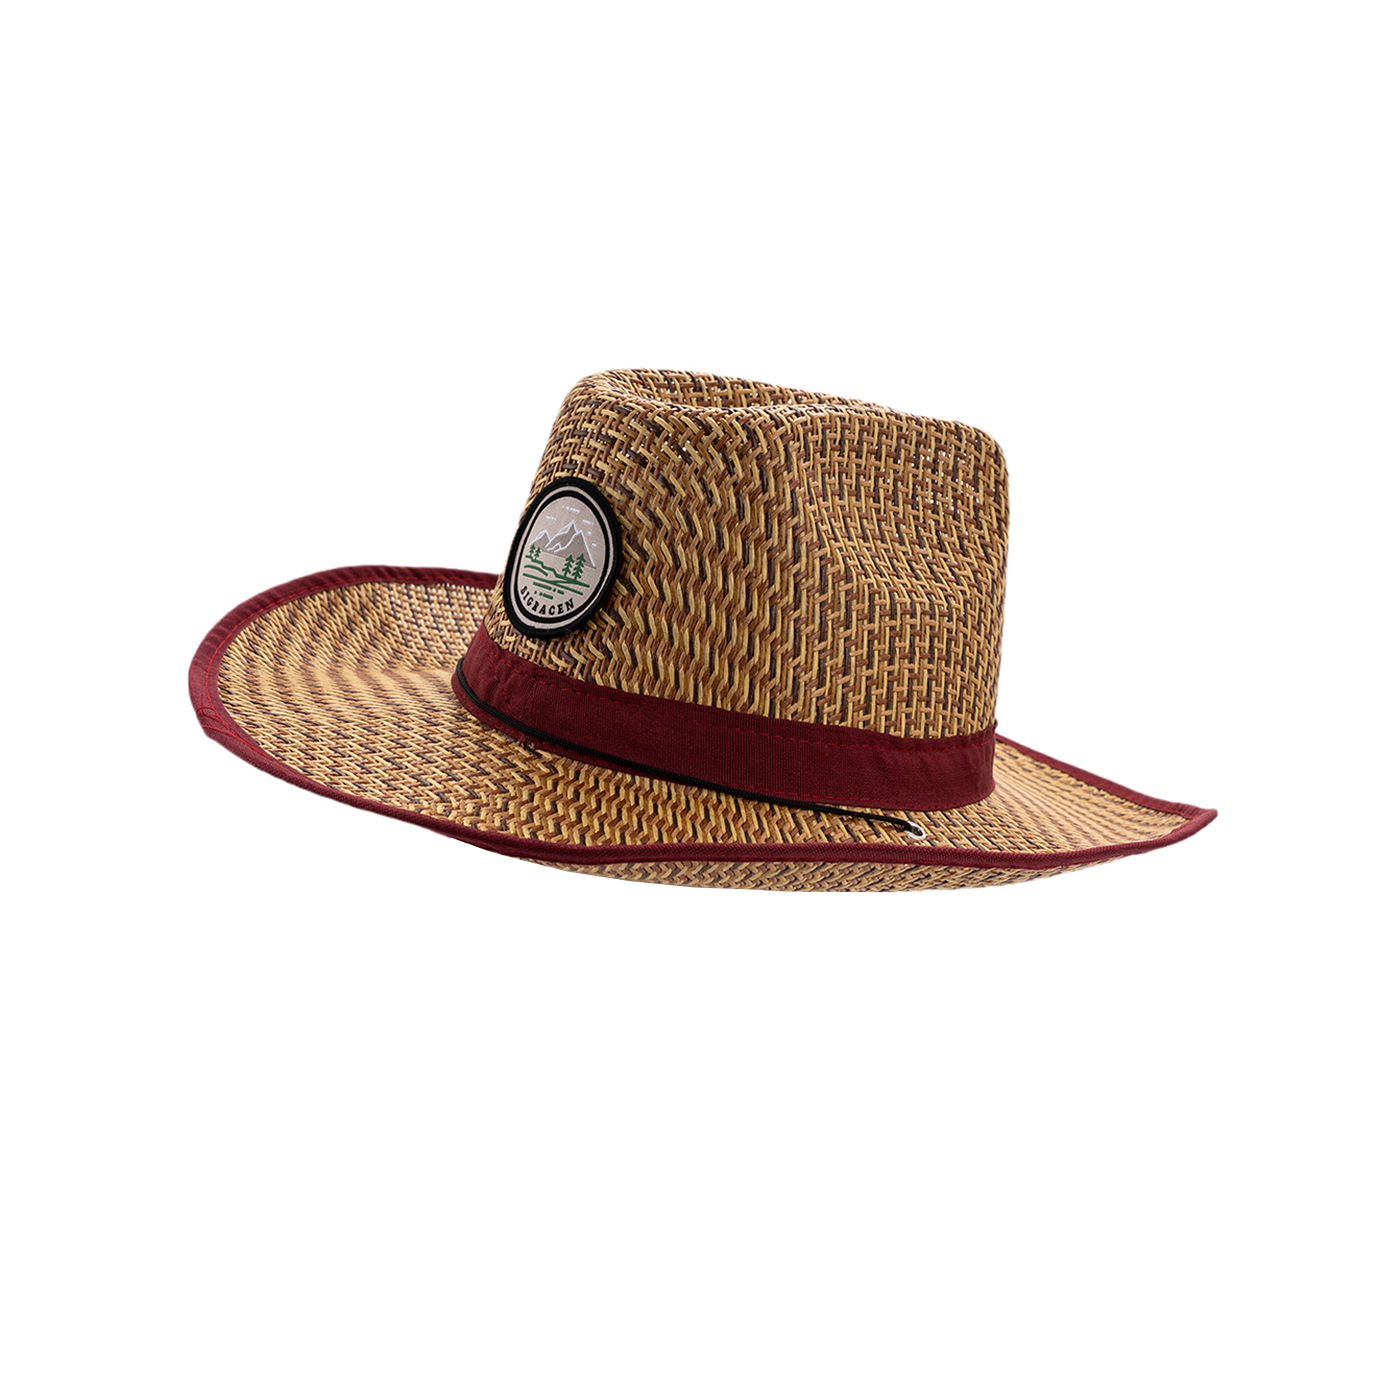 Panama Straw Cowboy Hat With Strap1